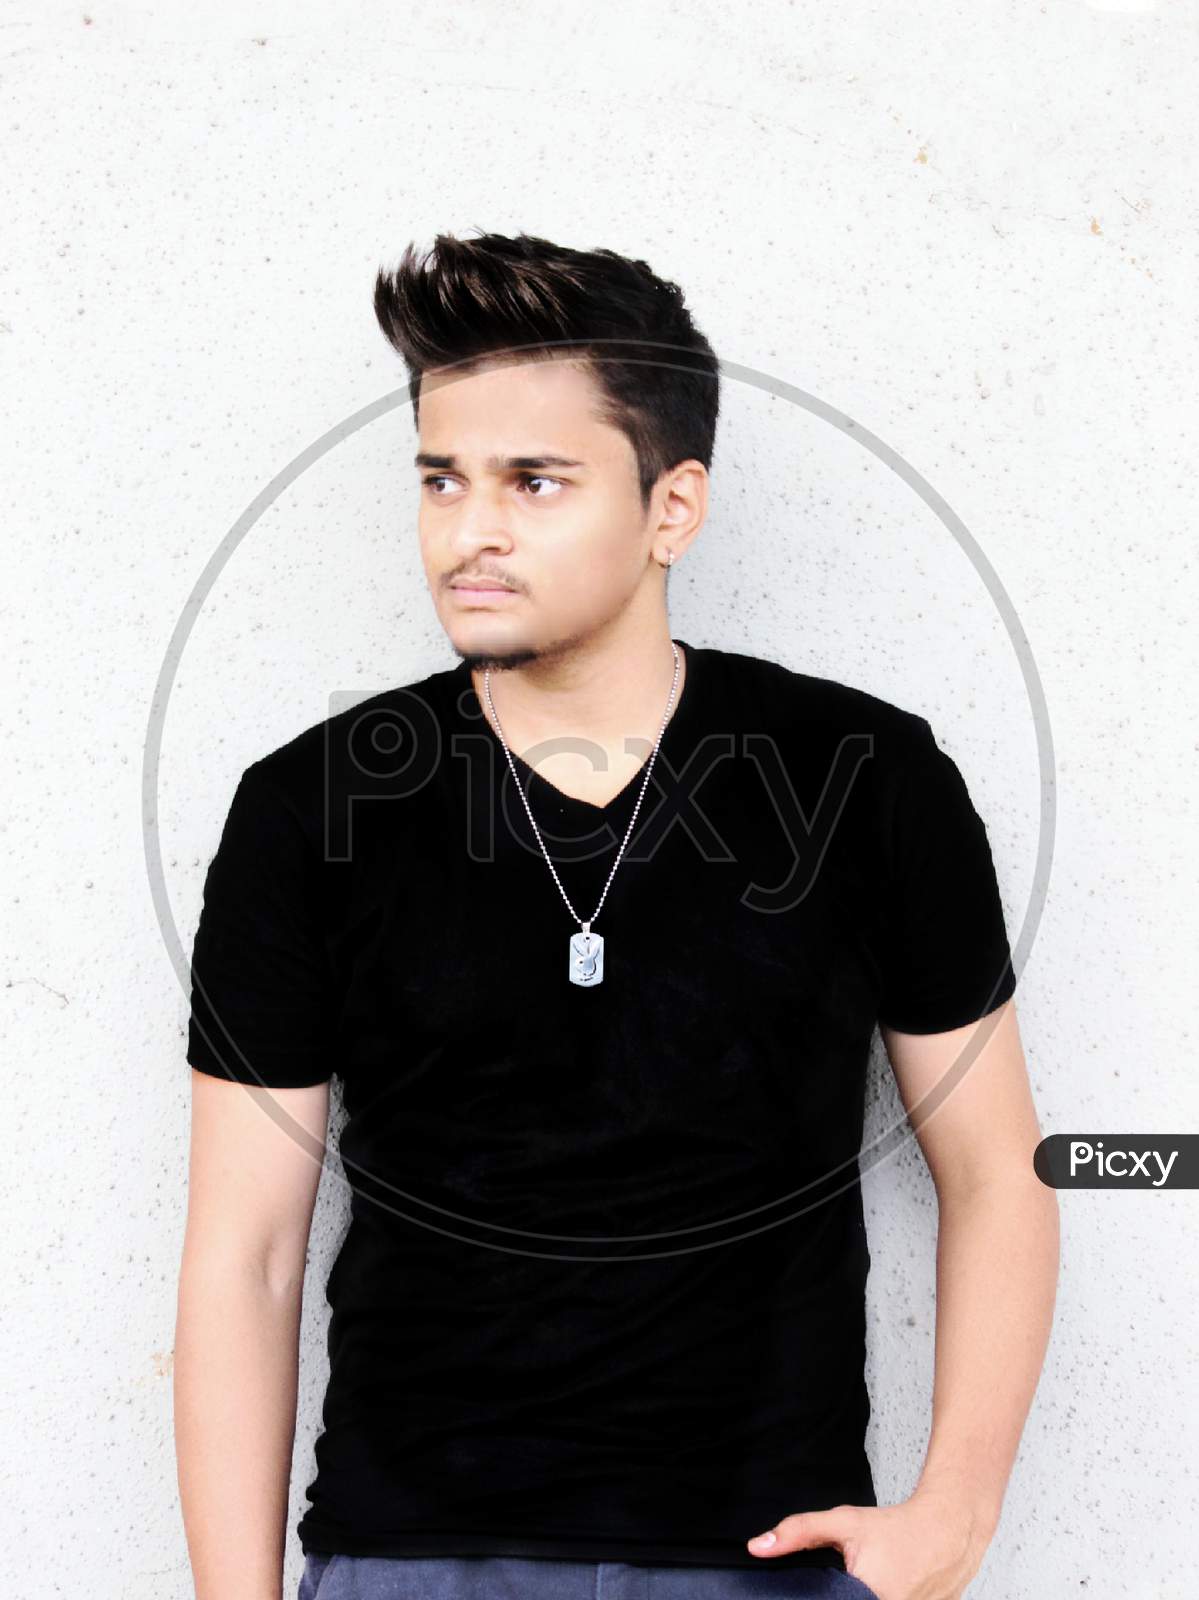 smart and handsome teenage boy standing wearing black t-shirt